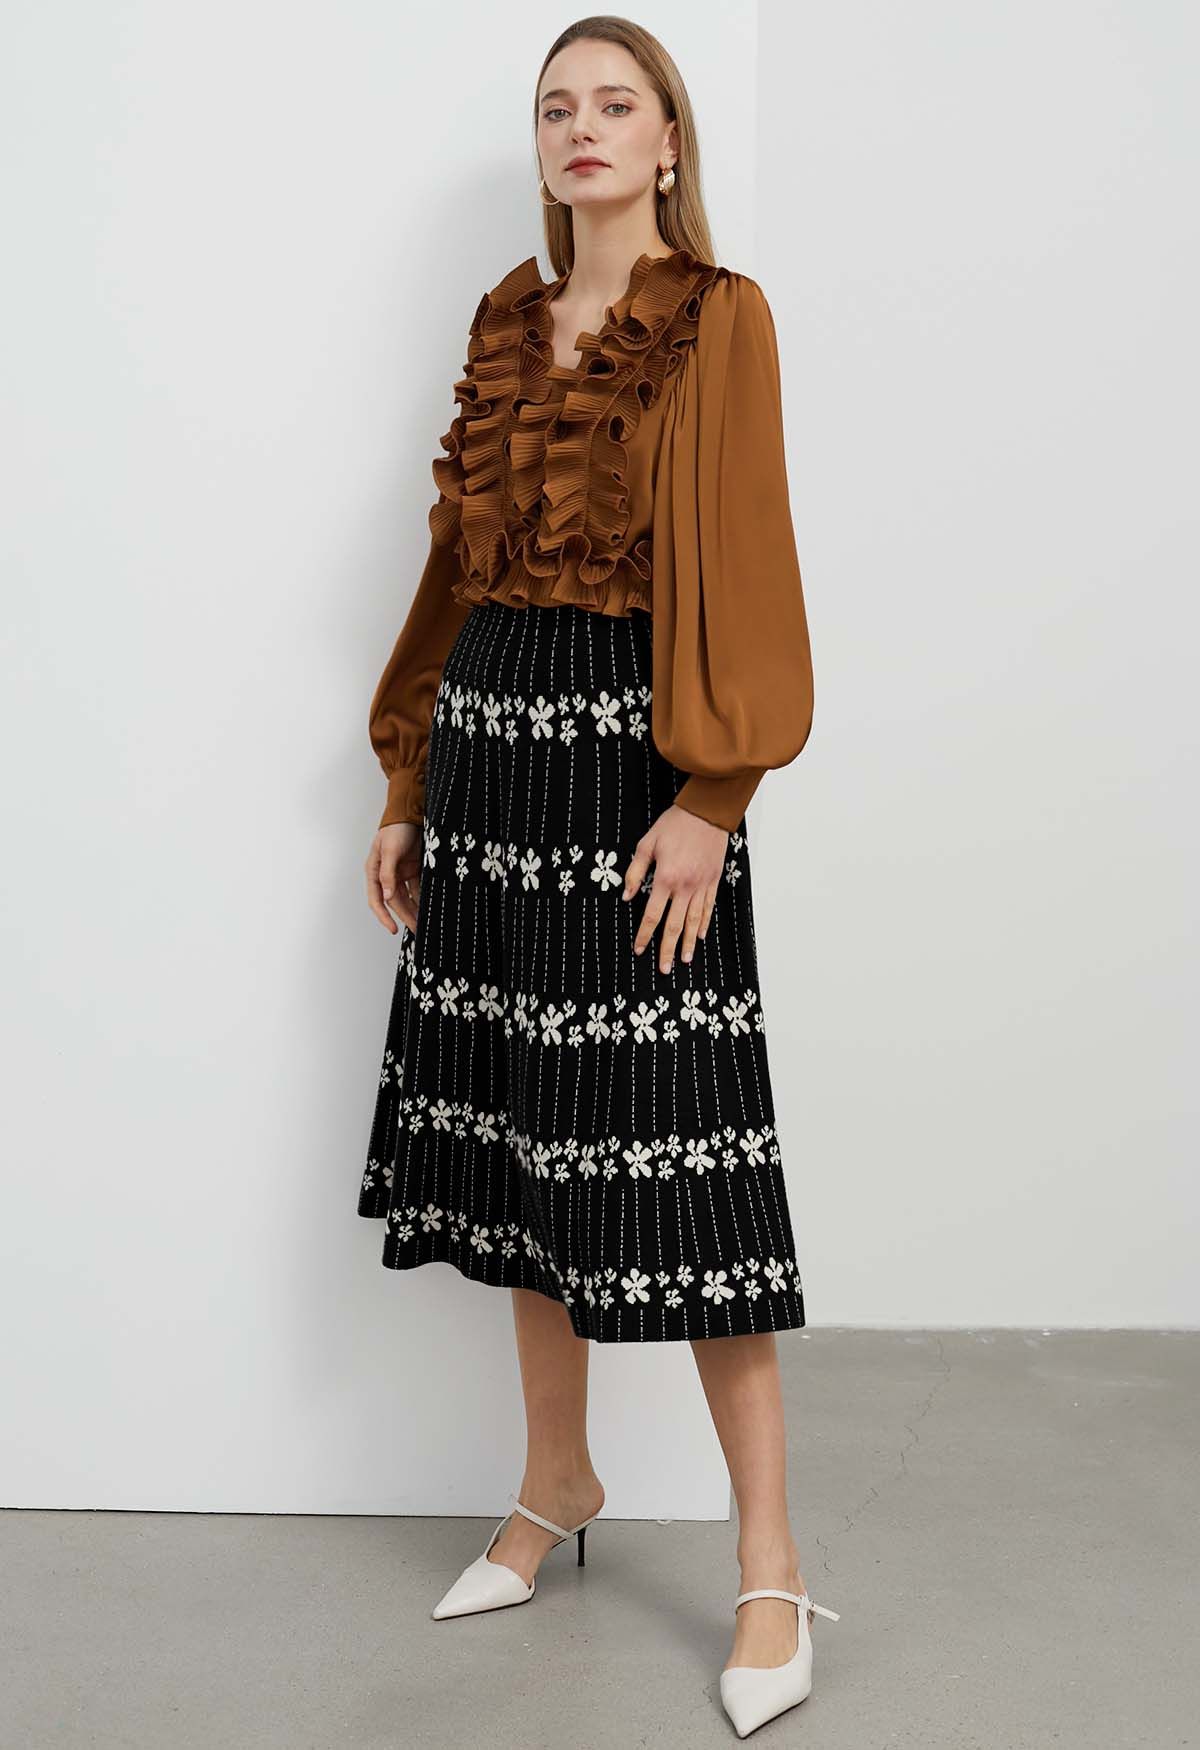 Floret Chain A-Line Knit Midi Skirt in Black